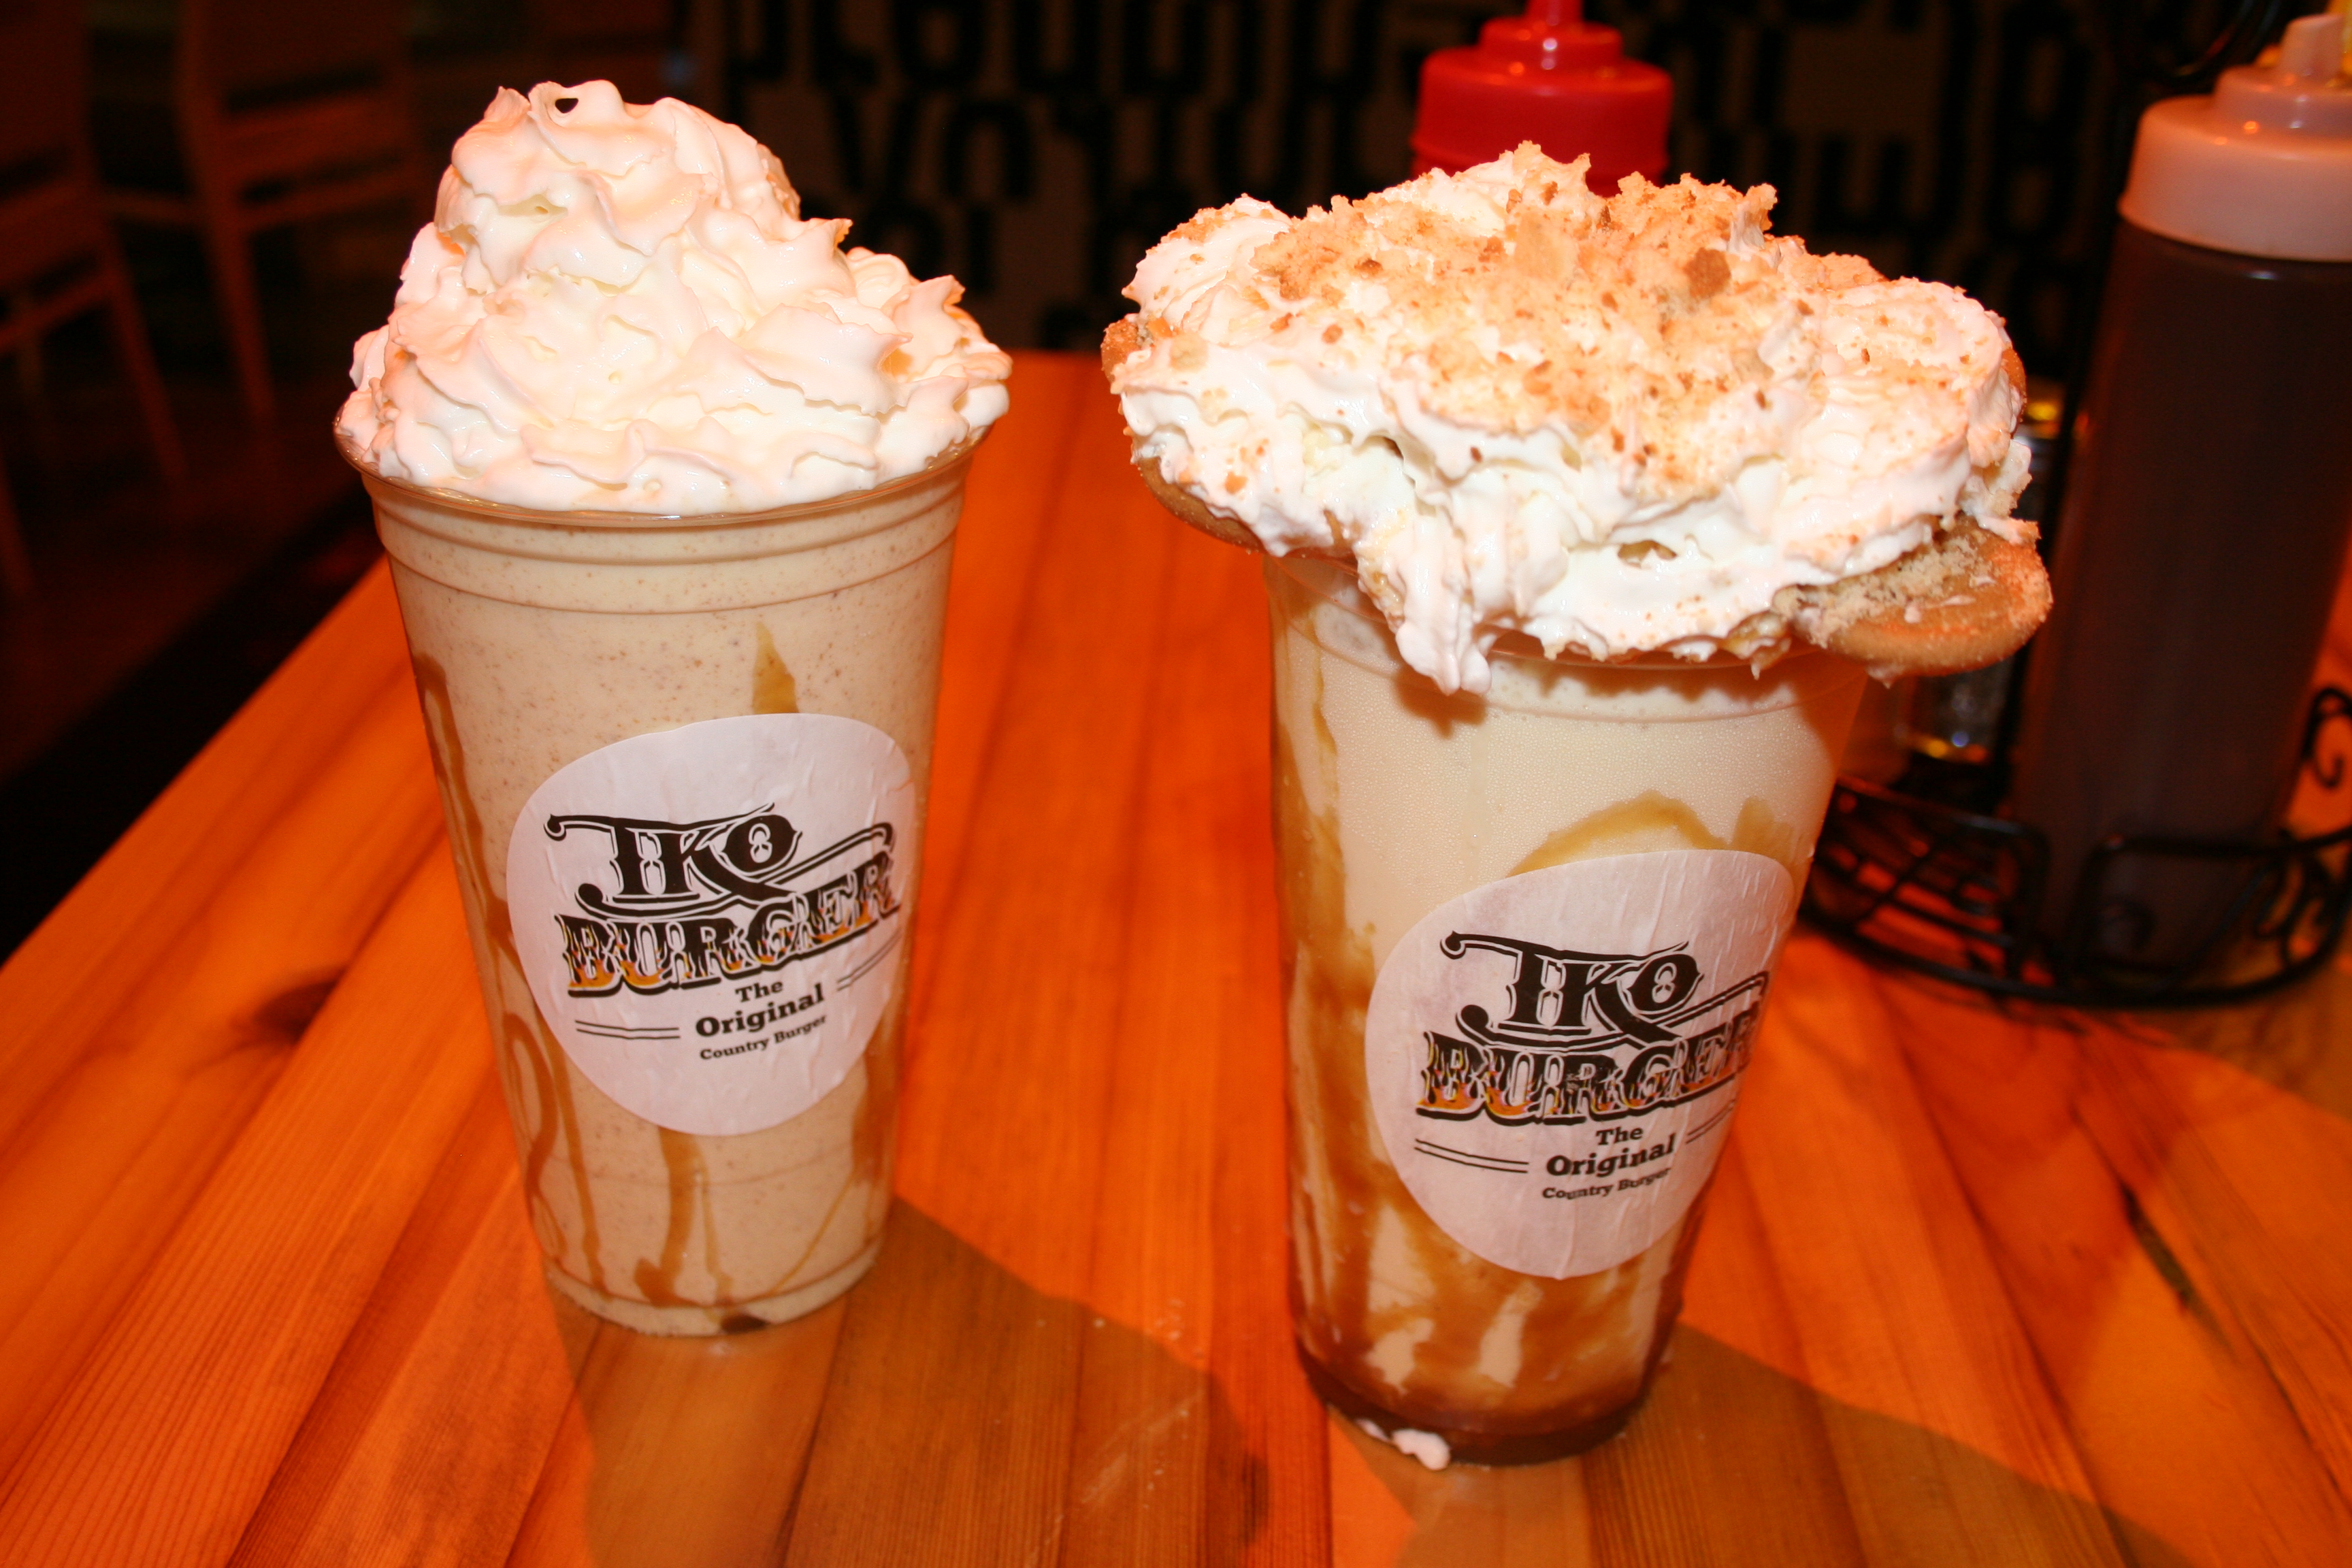 The peach cobbler milk shake and the banana pudding shake at TKO burger. (Photos: Mark Heckathorn/DC on Heels)